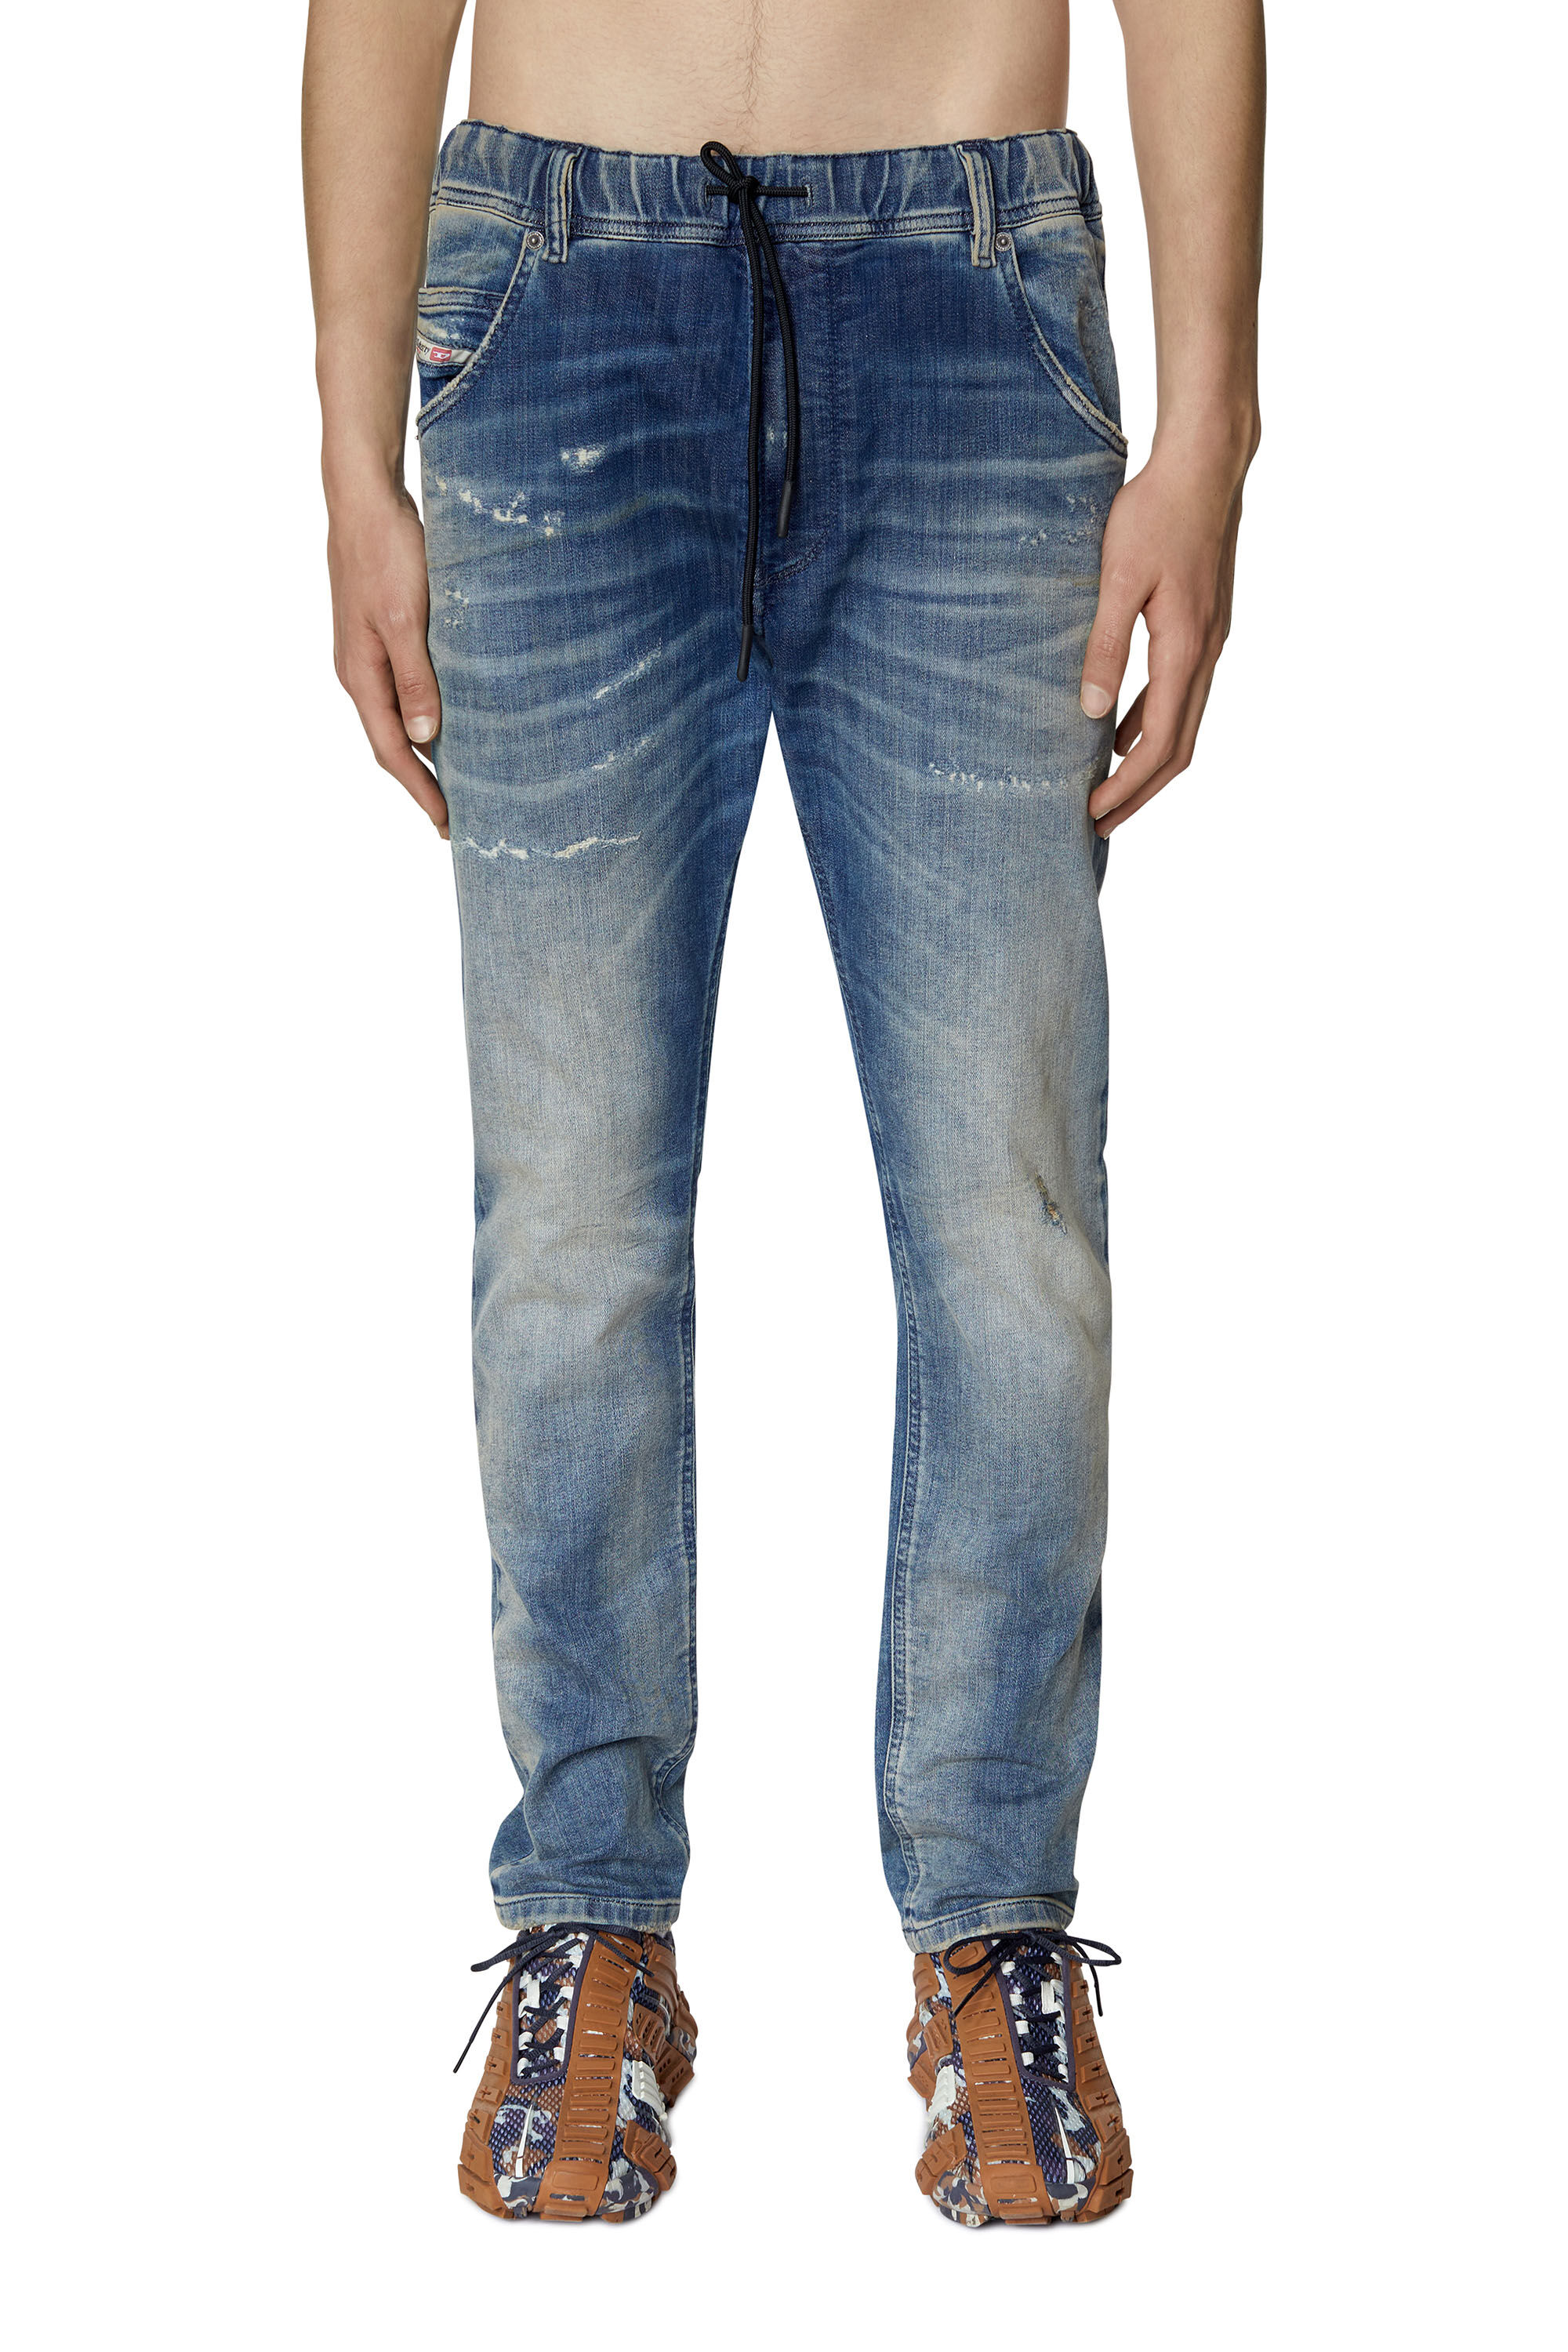 Krooley JoggJeans® 09E09 Man: Tapered Medium blue Jeans | Diesel